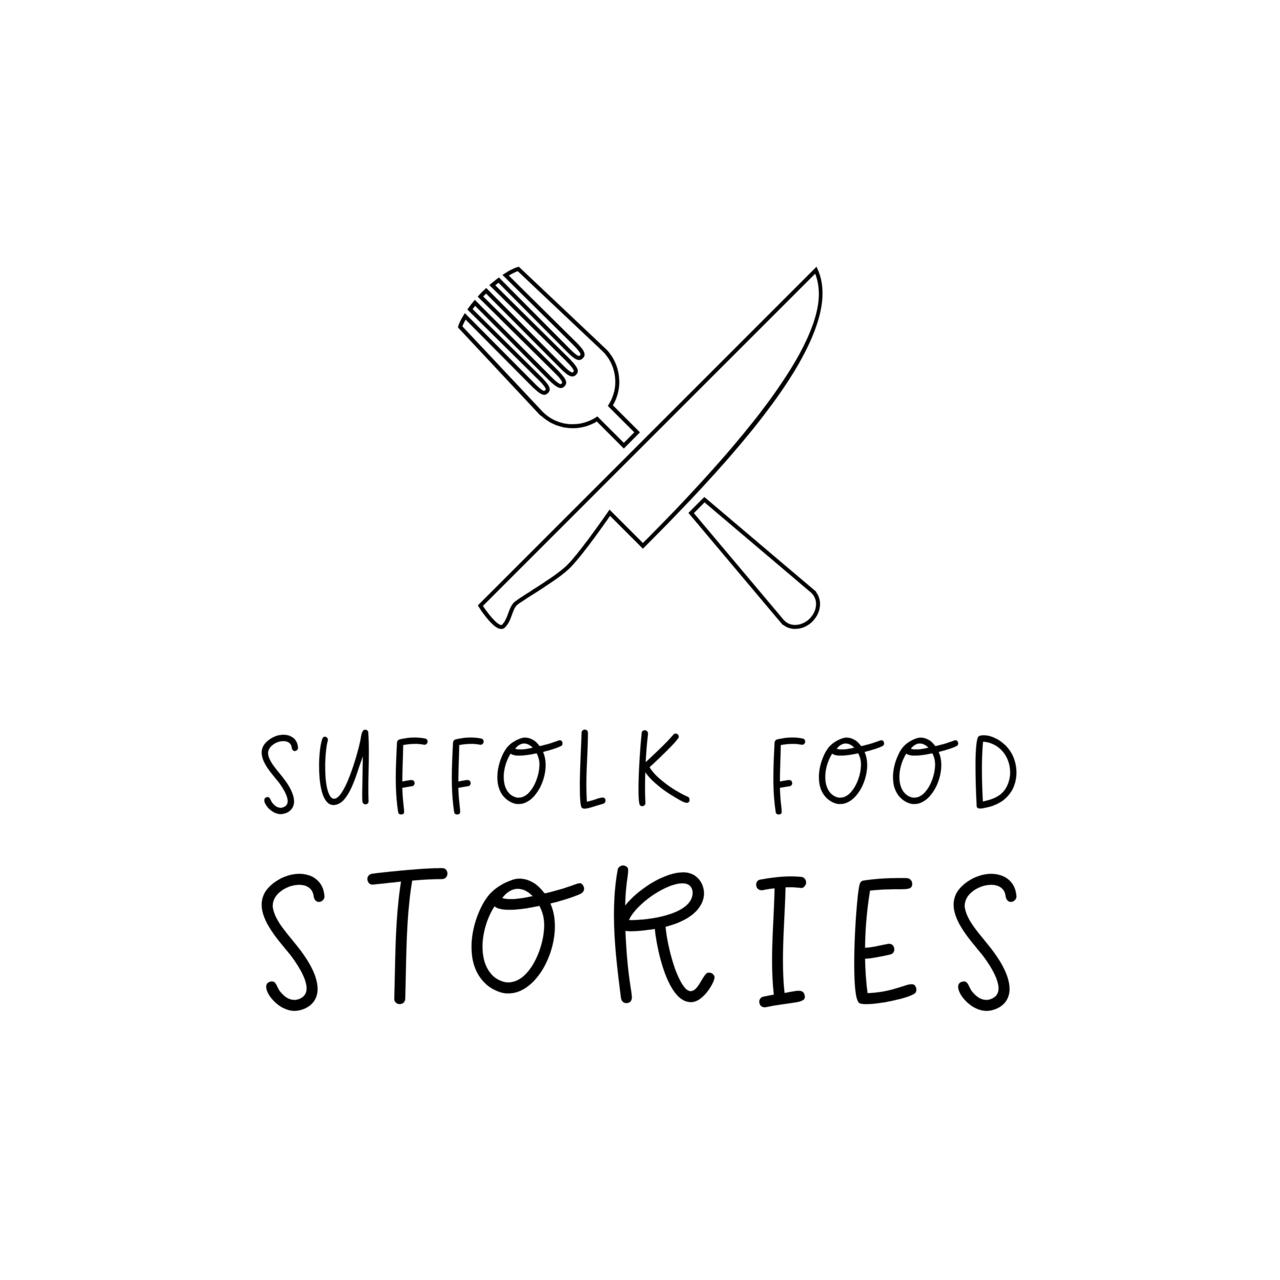 Artwork for Suffolk Food Stories